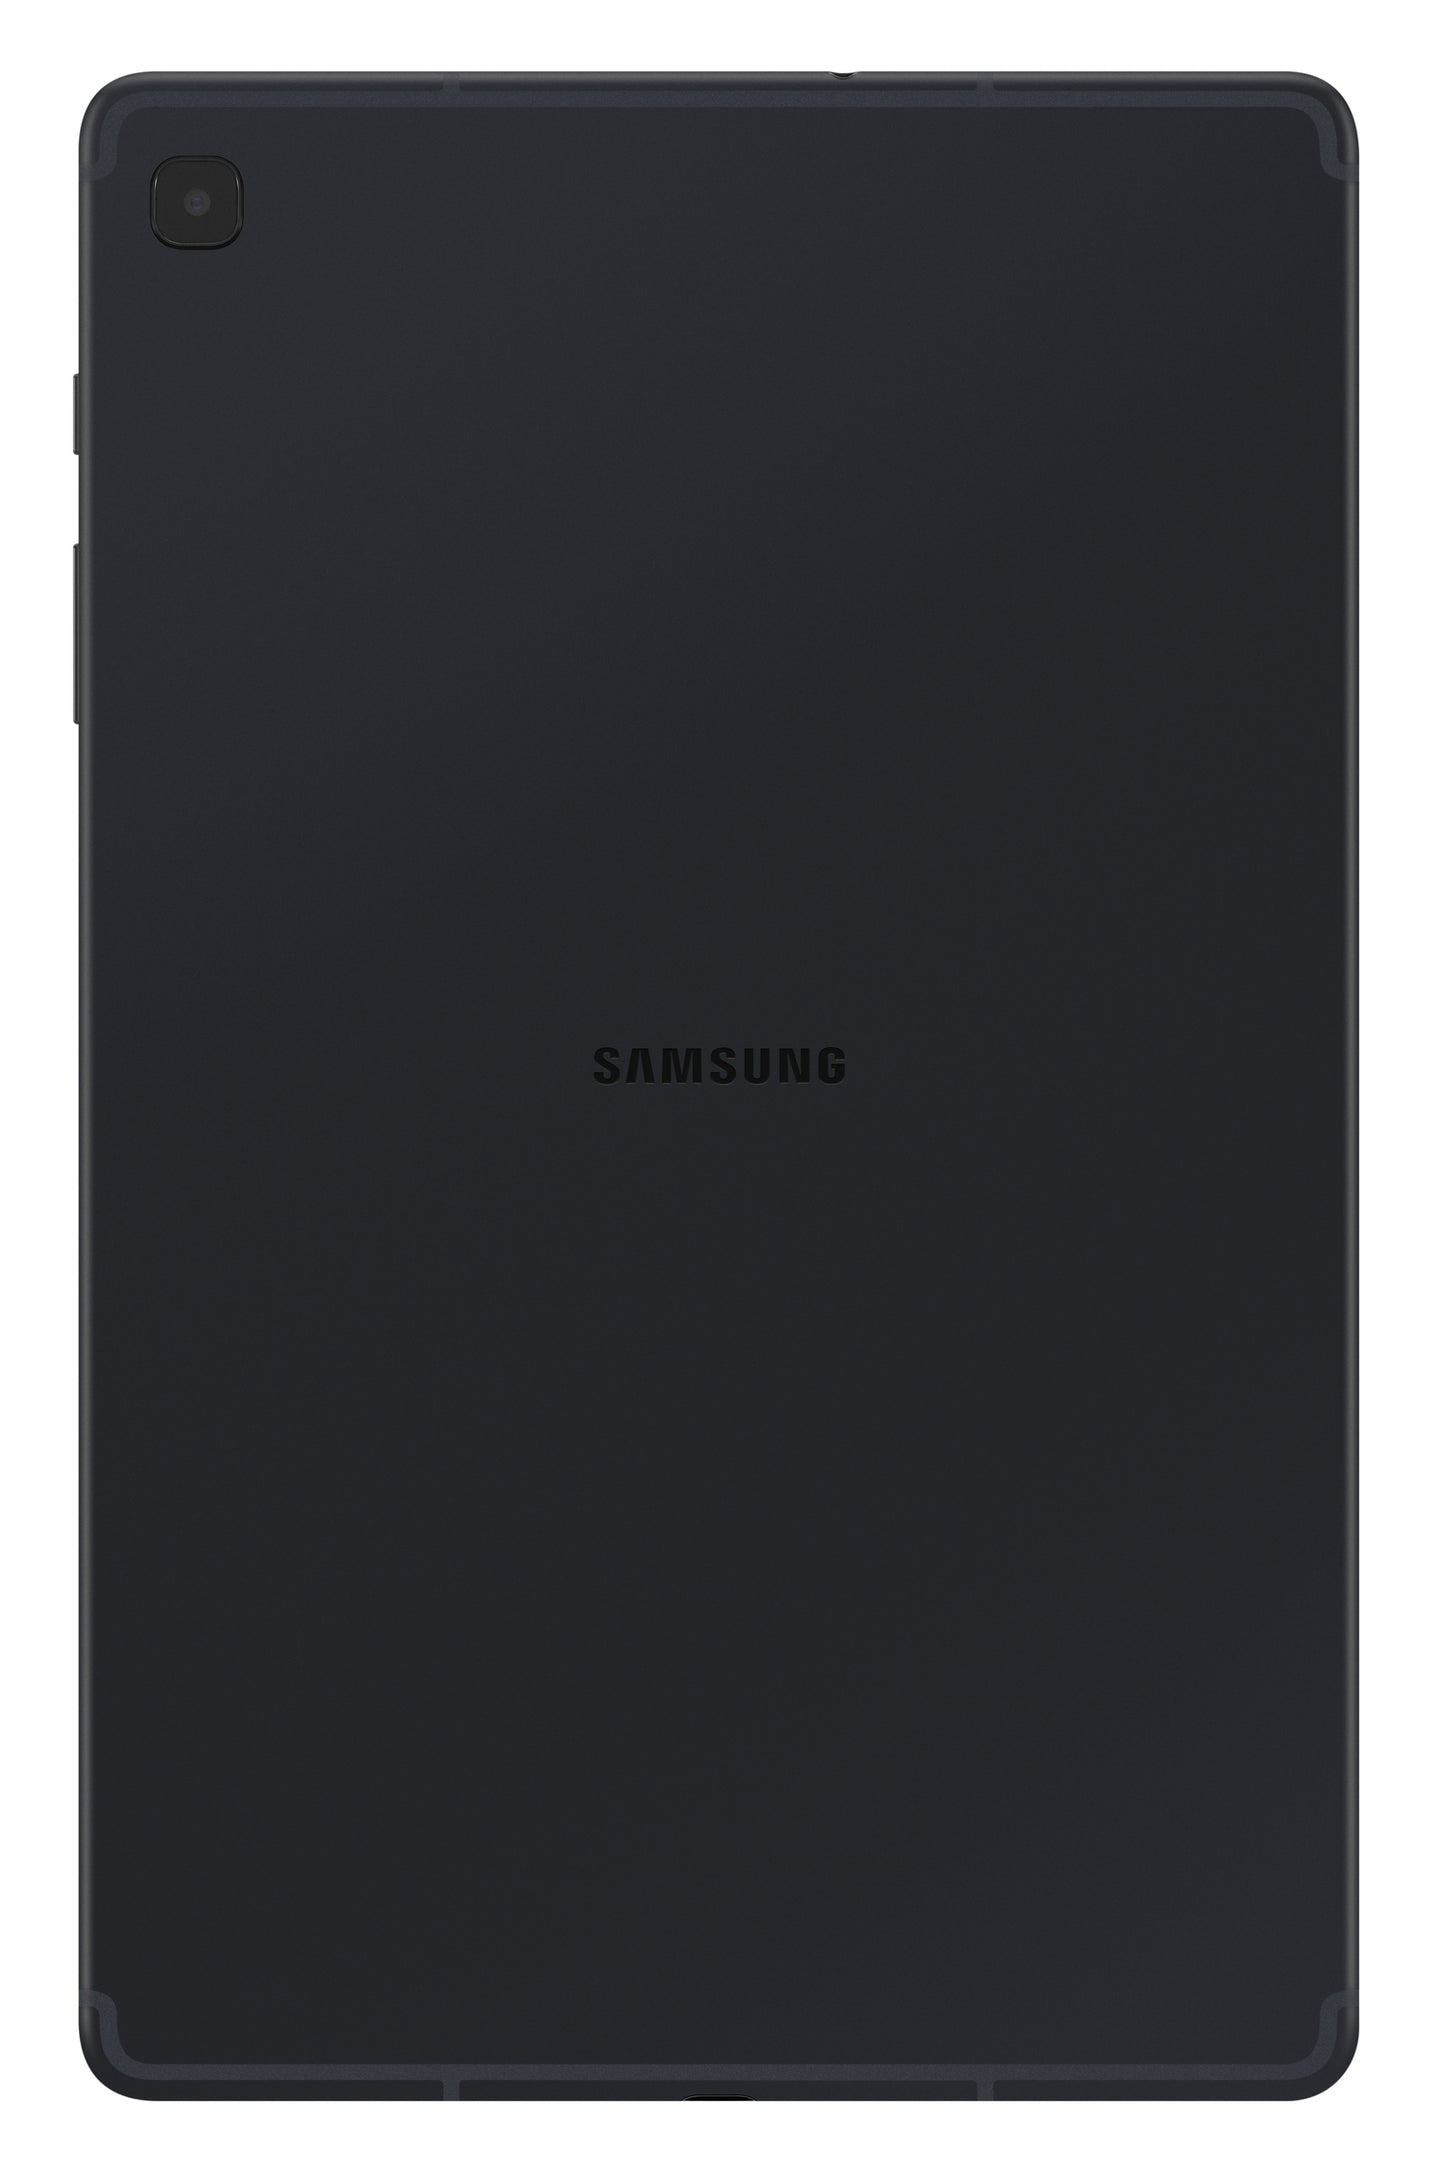 Samsung Galaxy Tab S6 Lite Wi-Fi 64GB 10.4-in Tablet - Oxford Gray